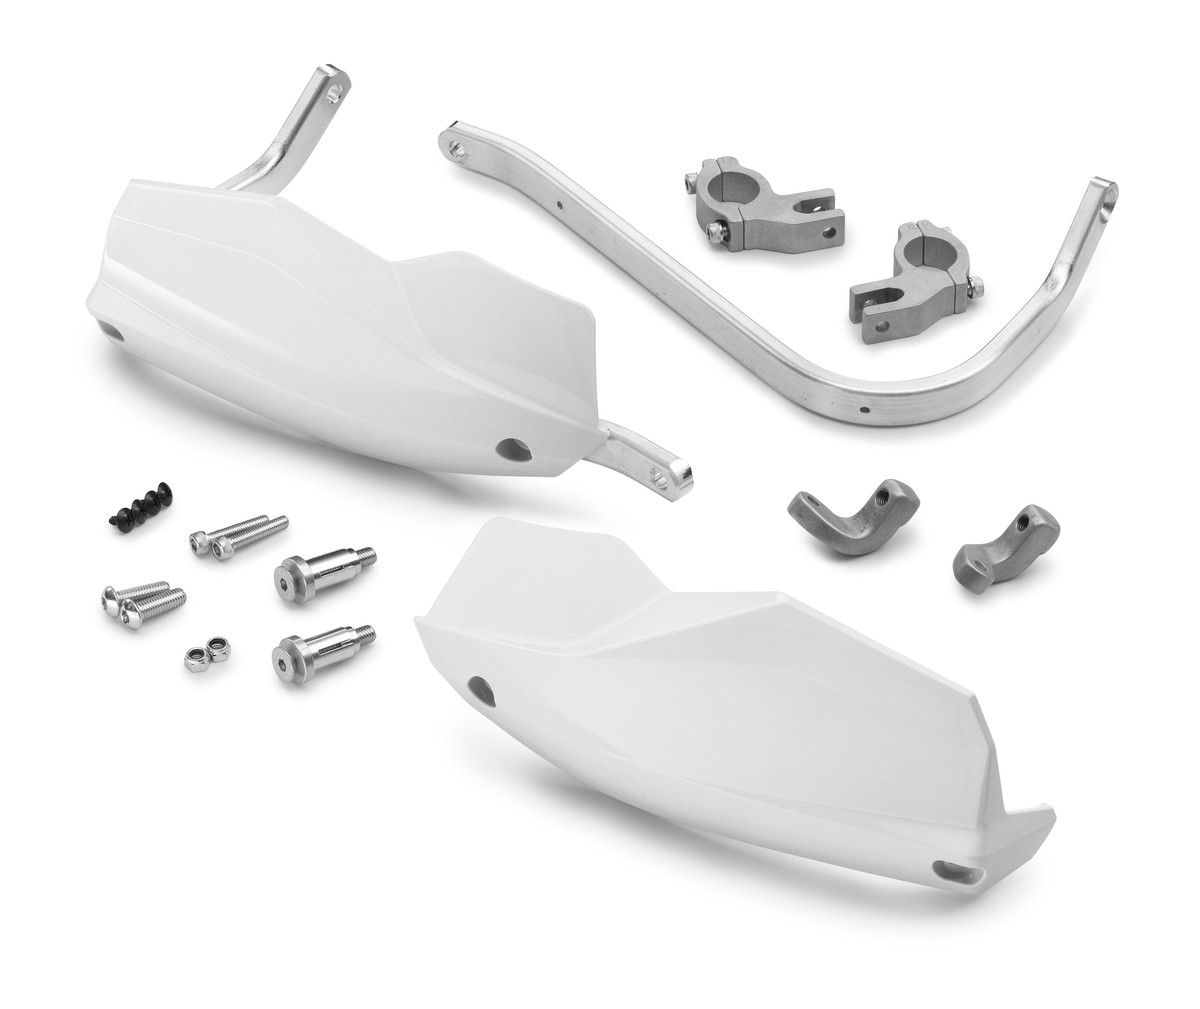 Main image of KTM Adventure Aluminum Handguards (White)